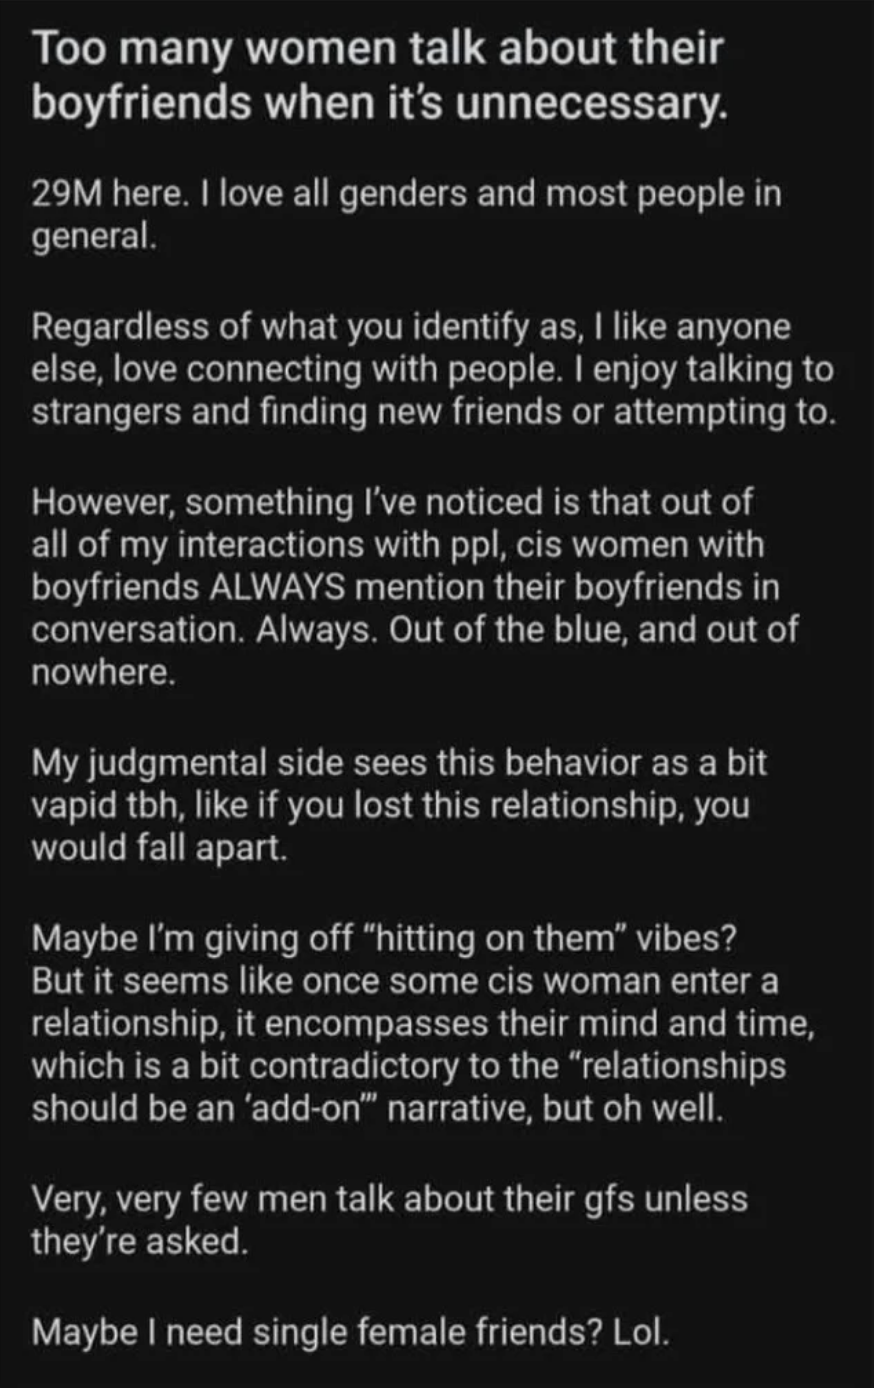 Reddit post of a man saying women shouldn't talk about their boyfriends